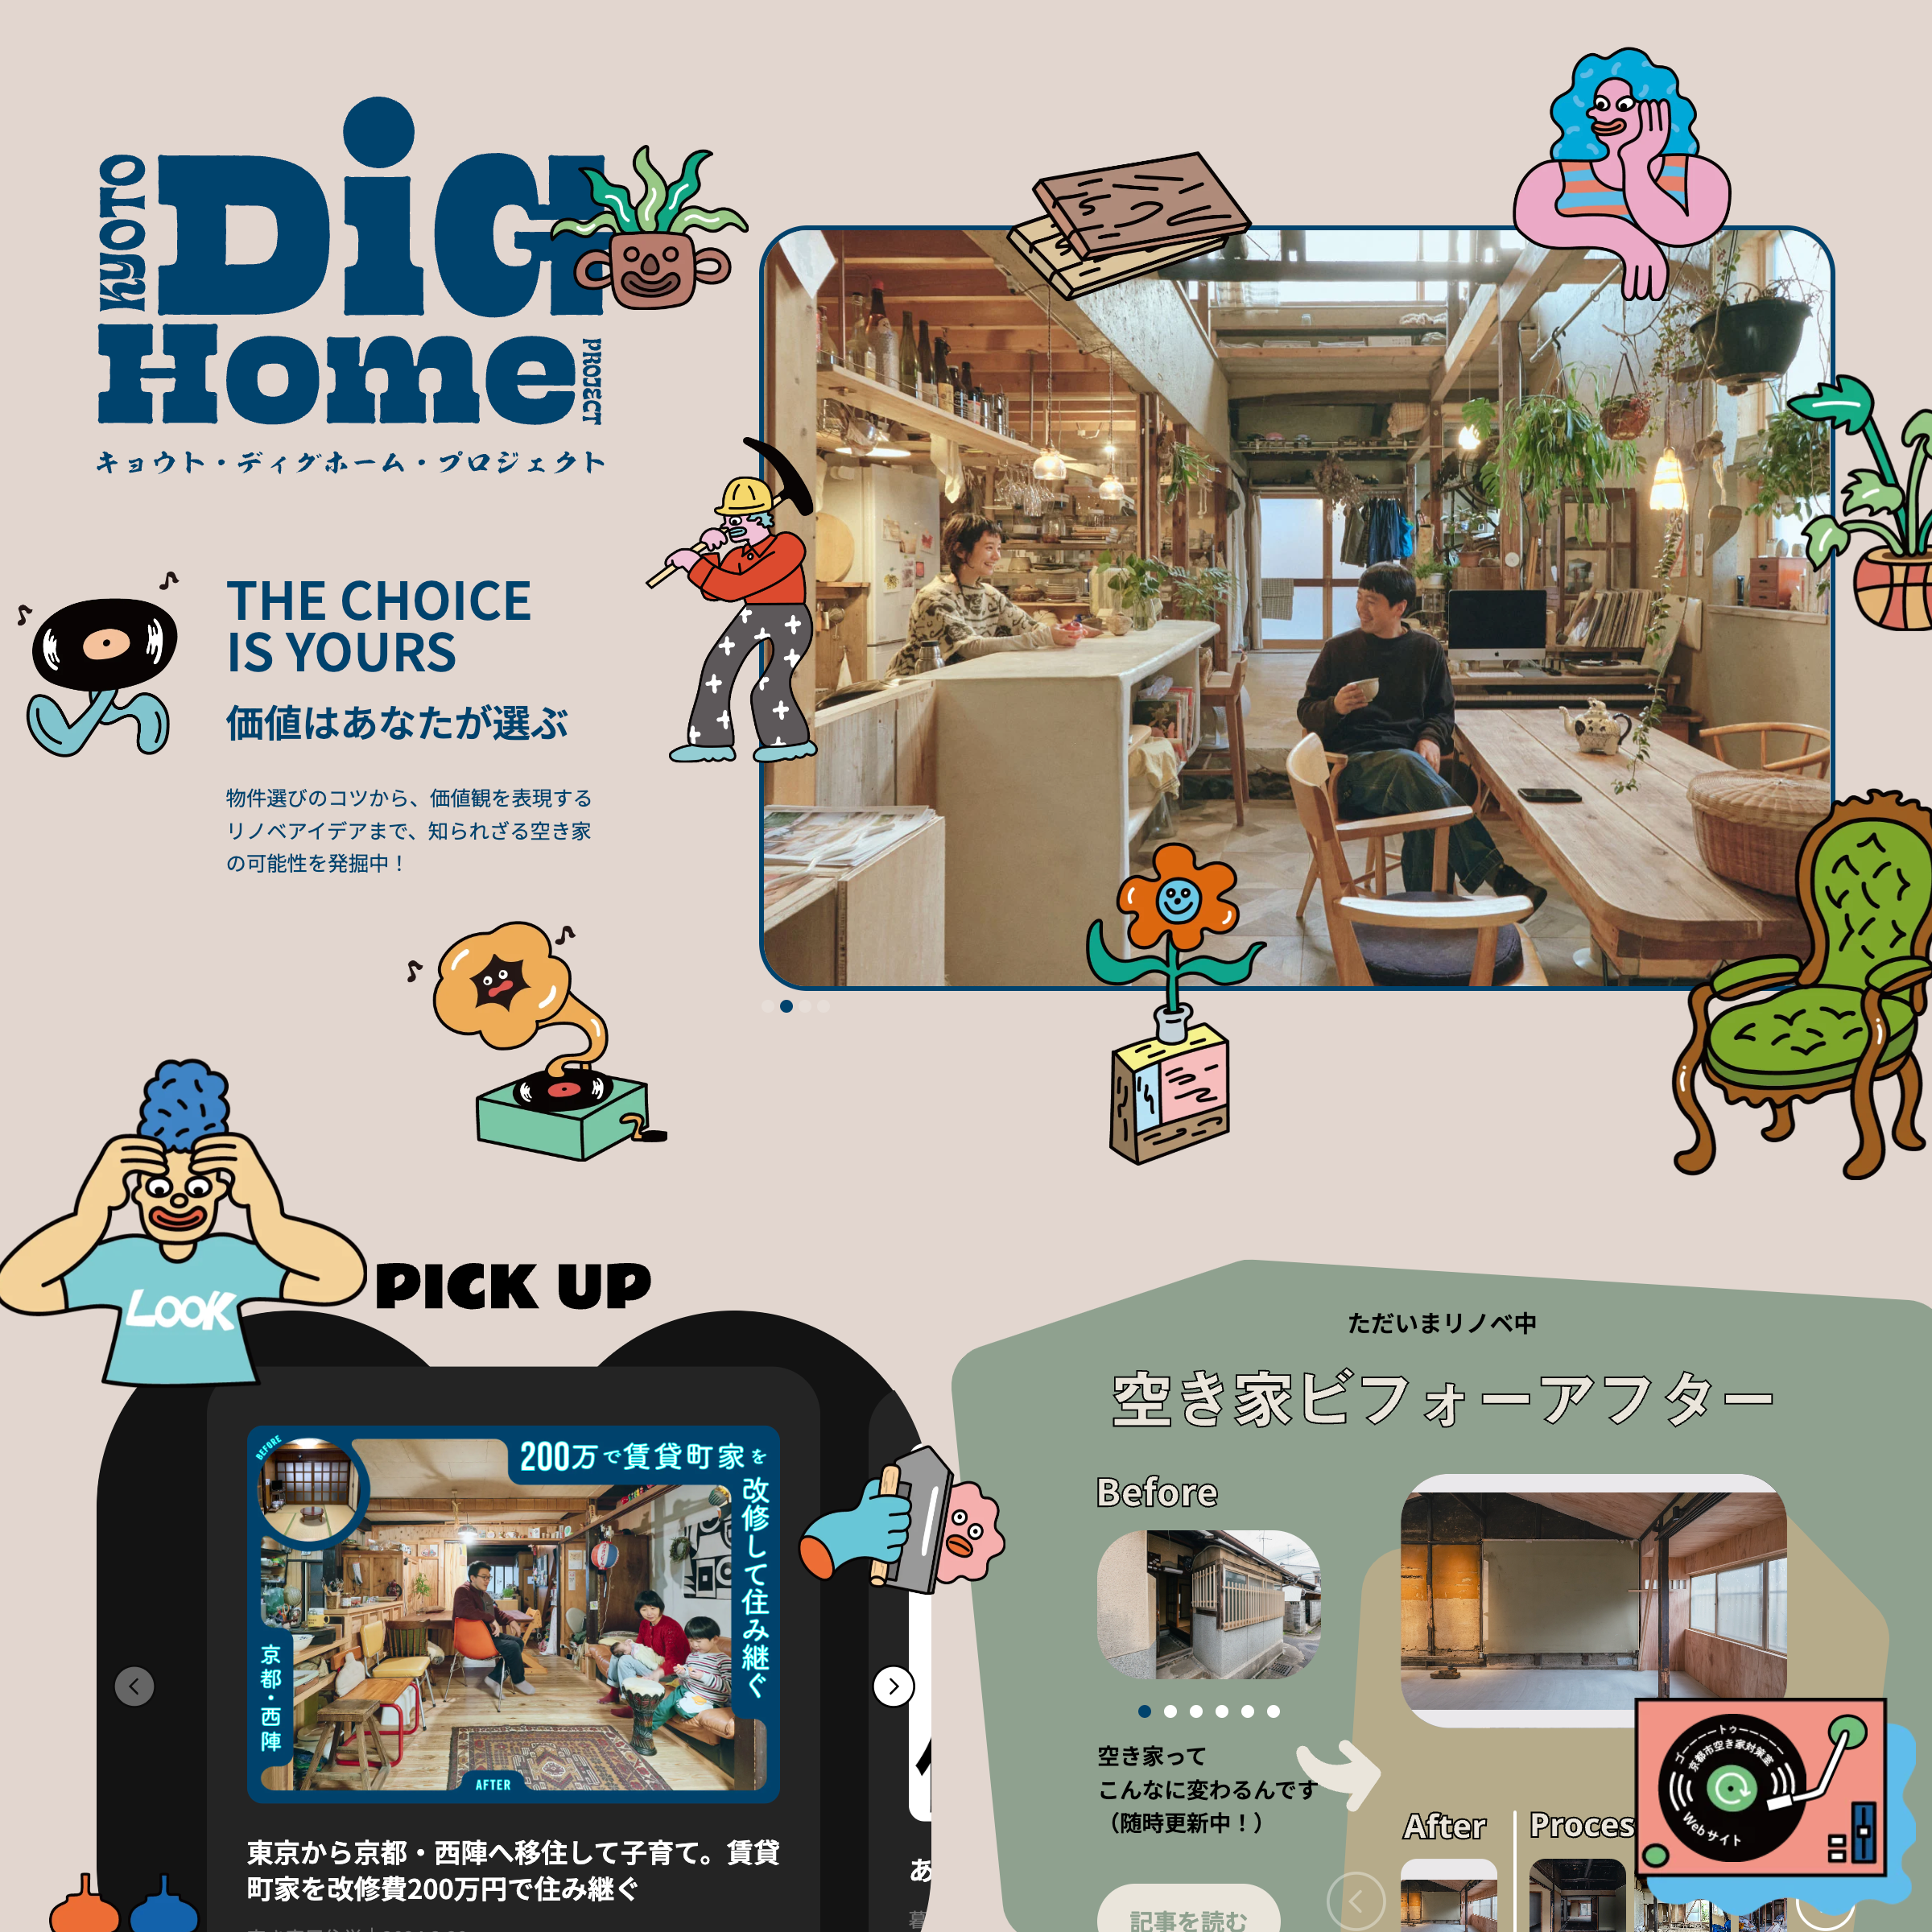 Kyoto Dig Home Projectのパソコンで見たファーストビューの画像